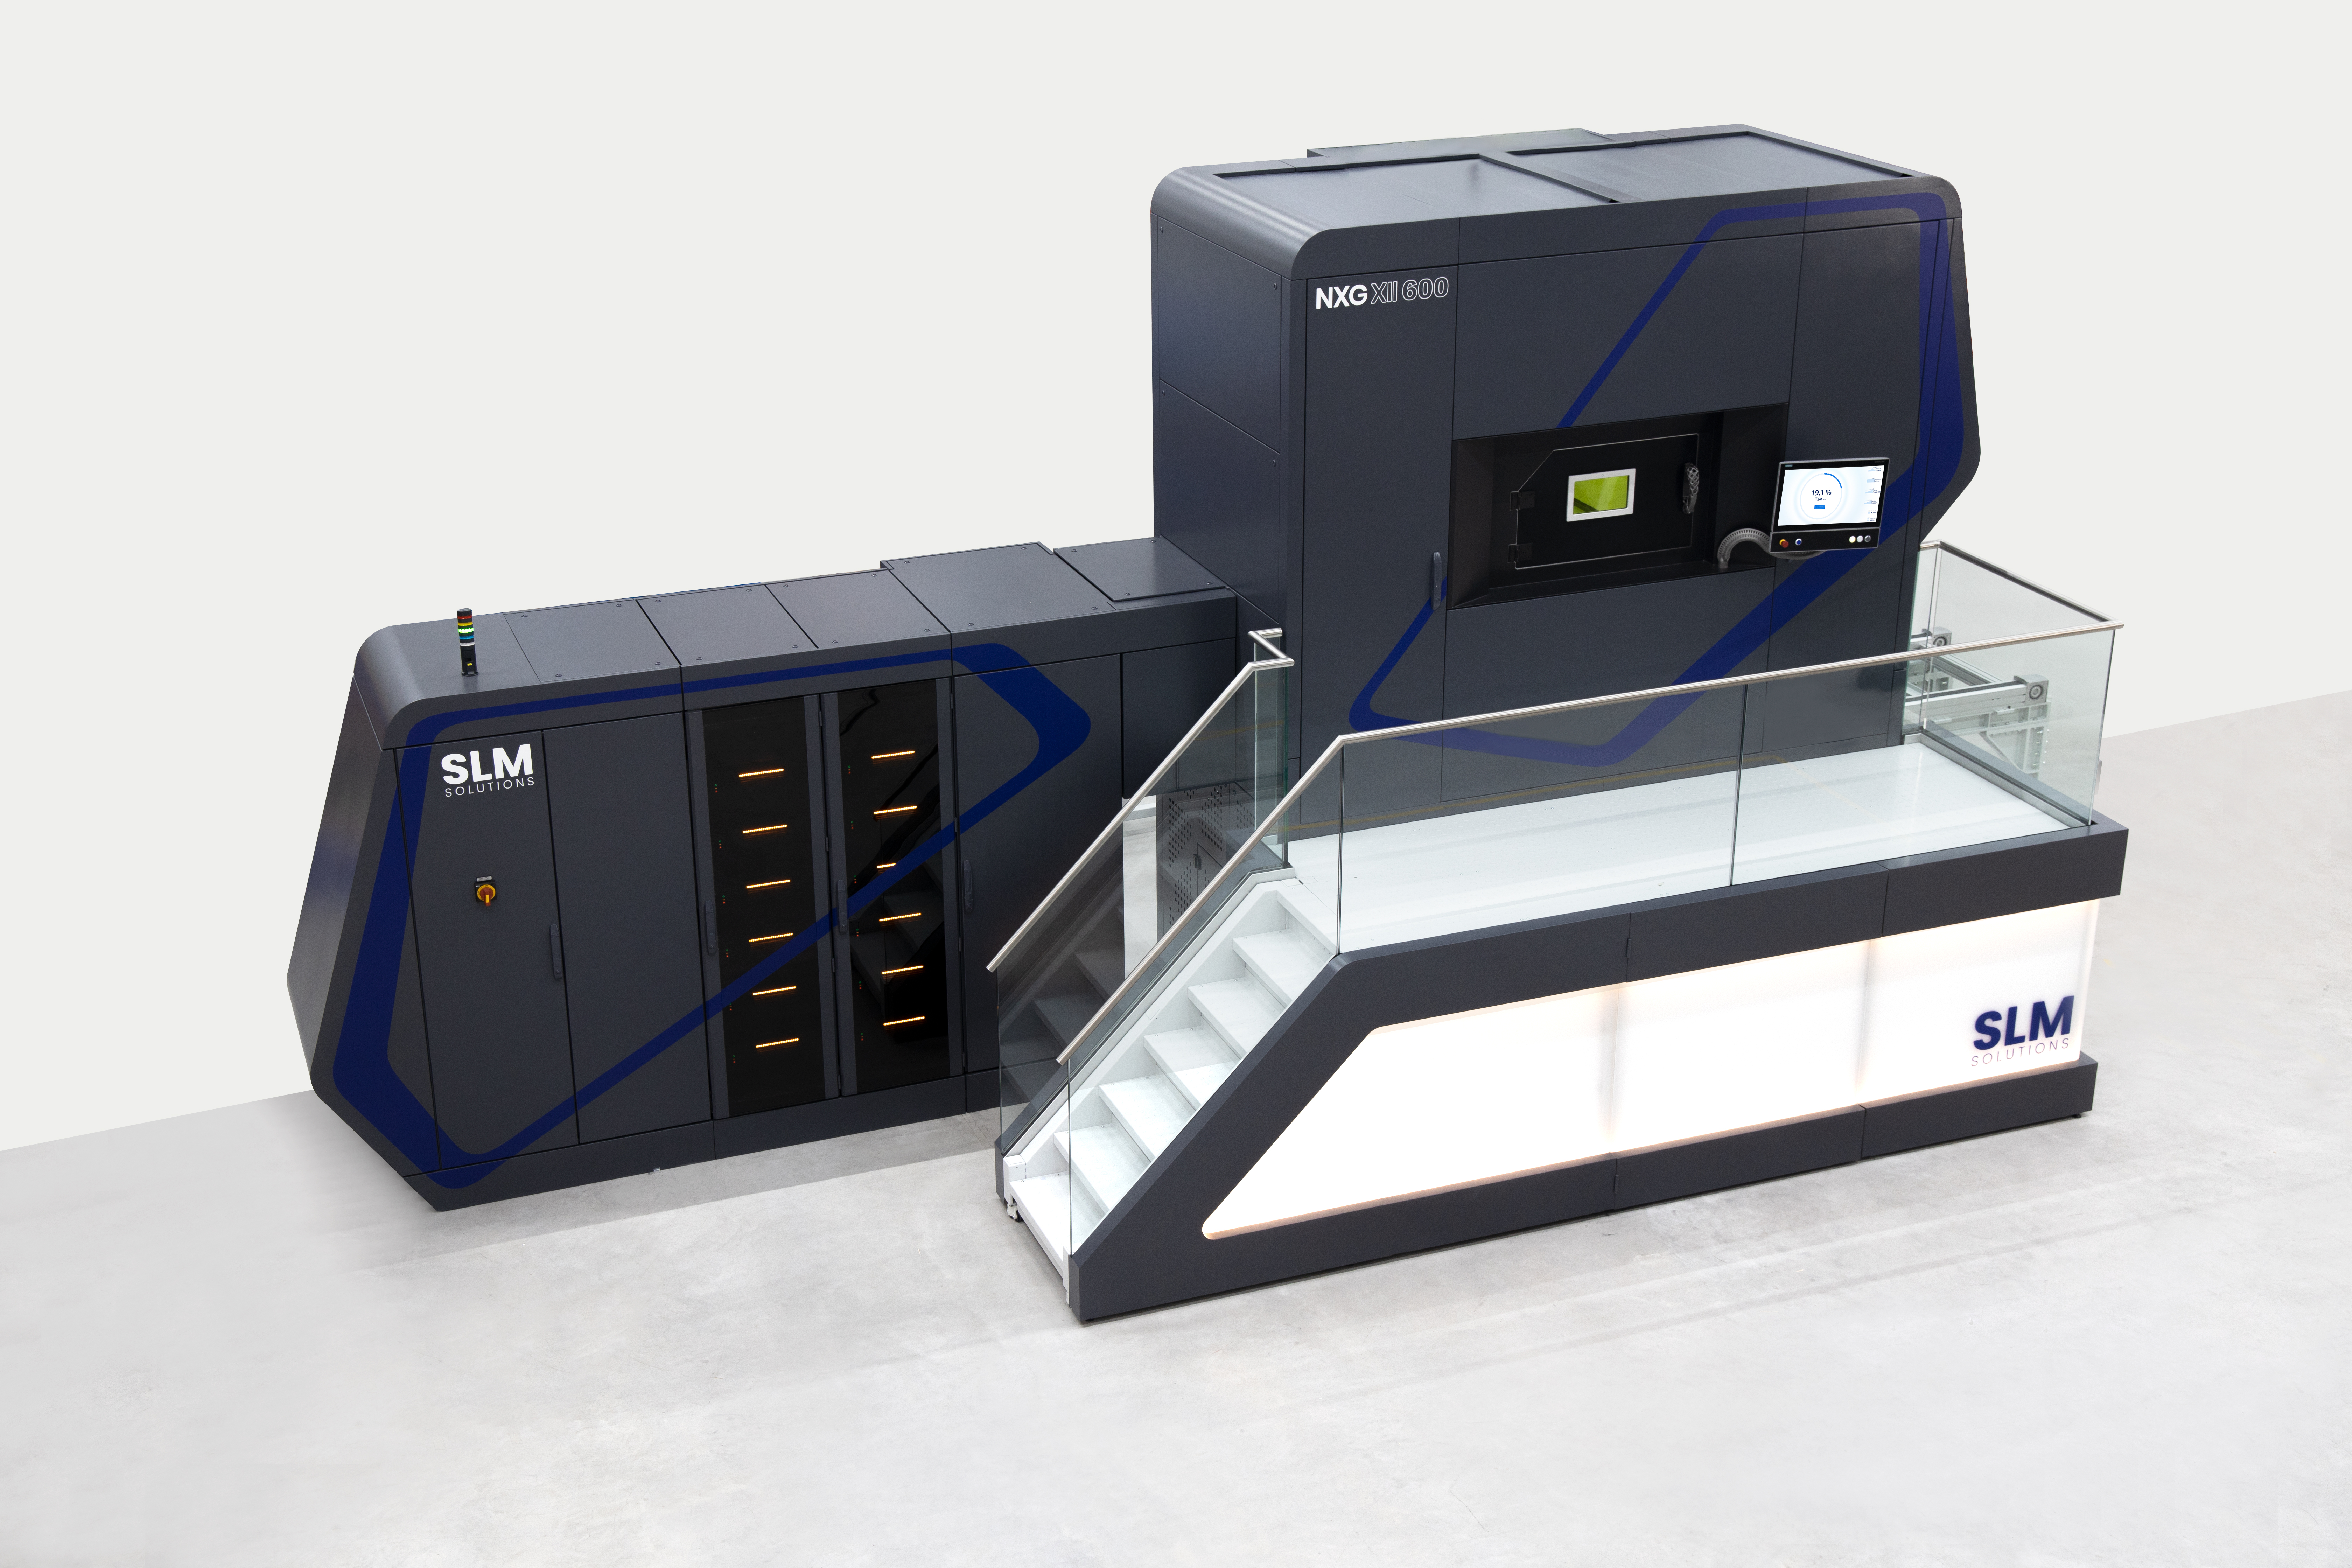 SLM Solutions' NXG X11 600 3D printing system. Image via SLM Solutions.